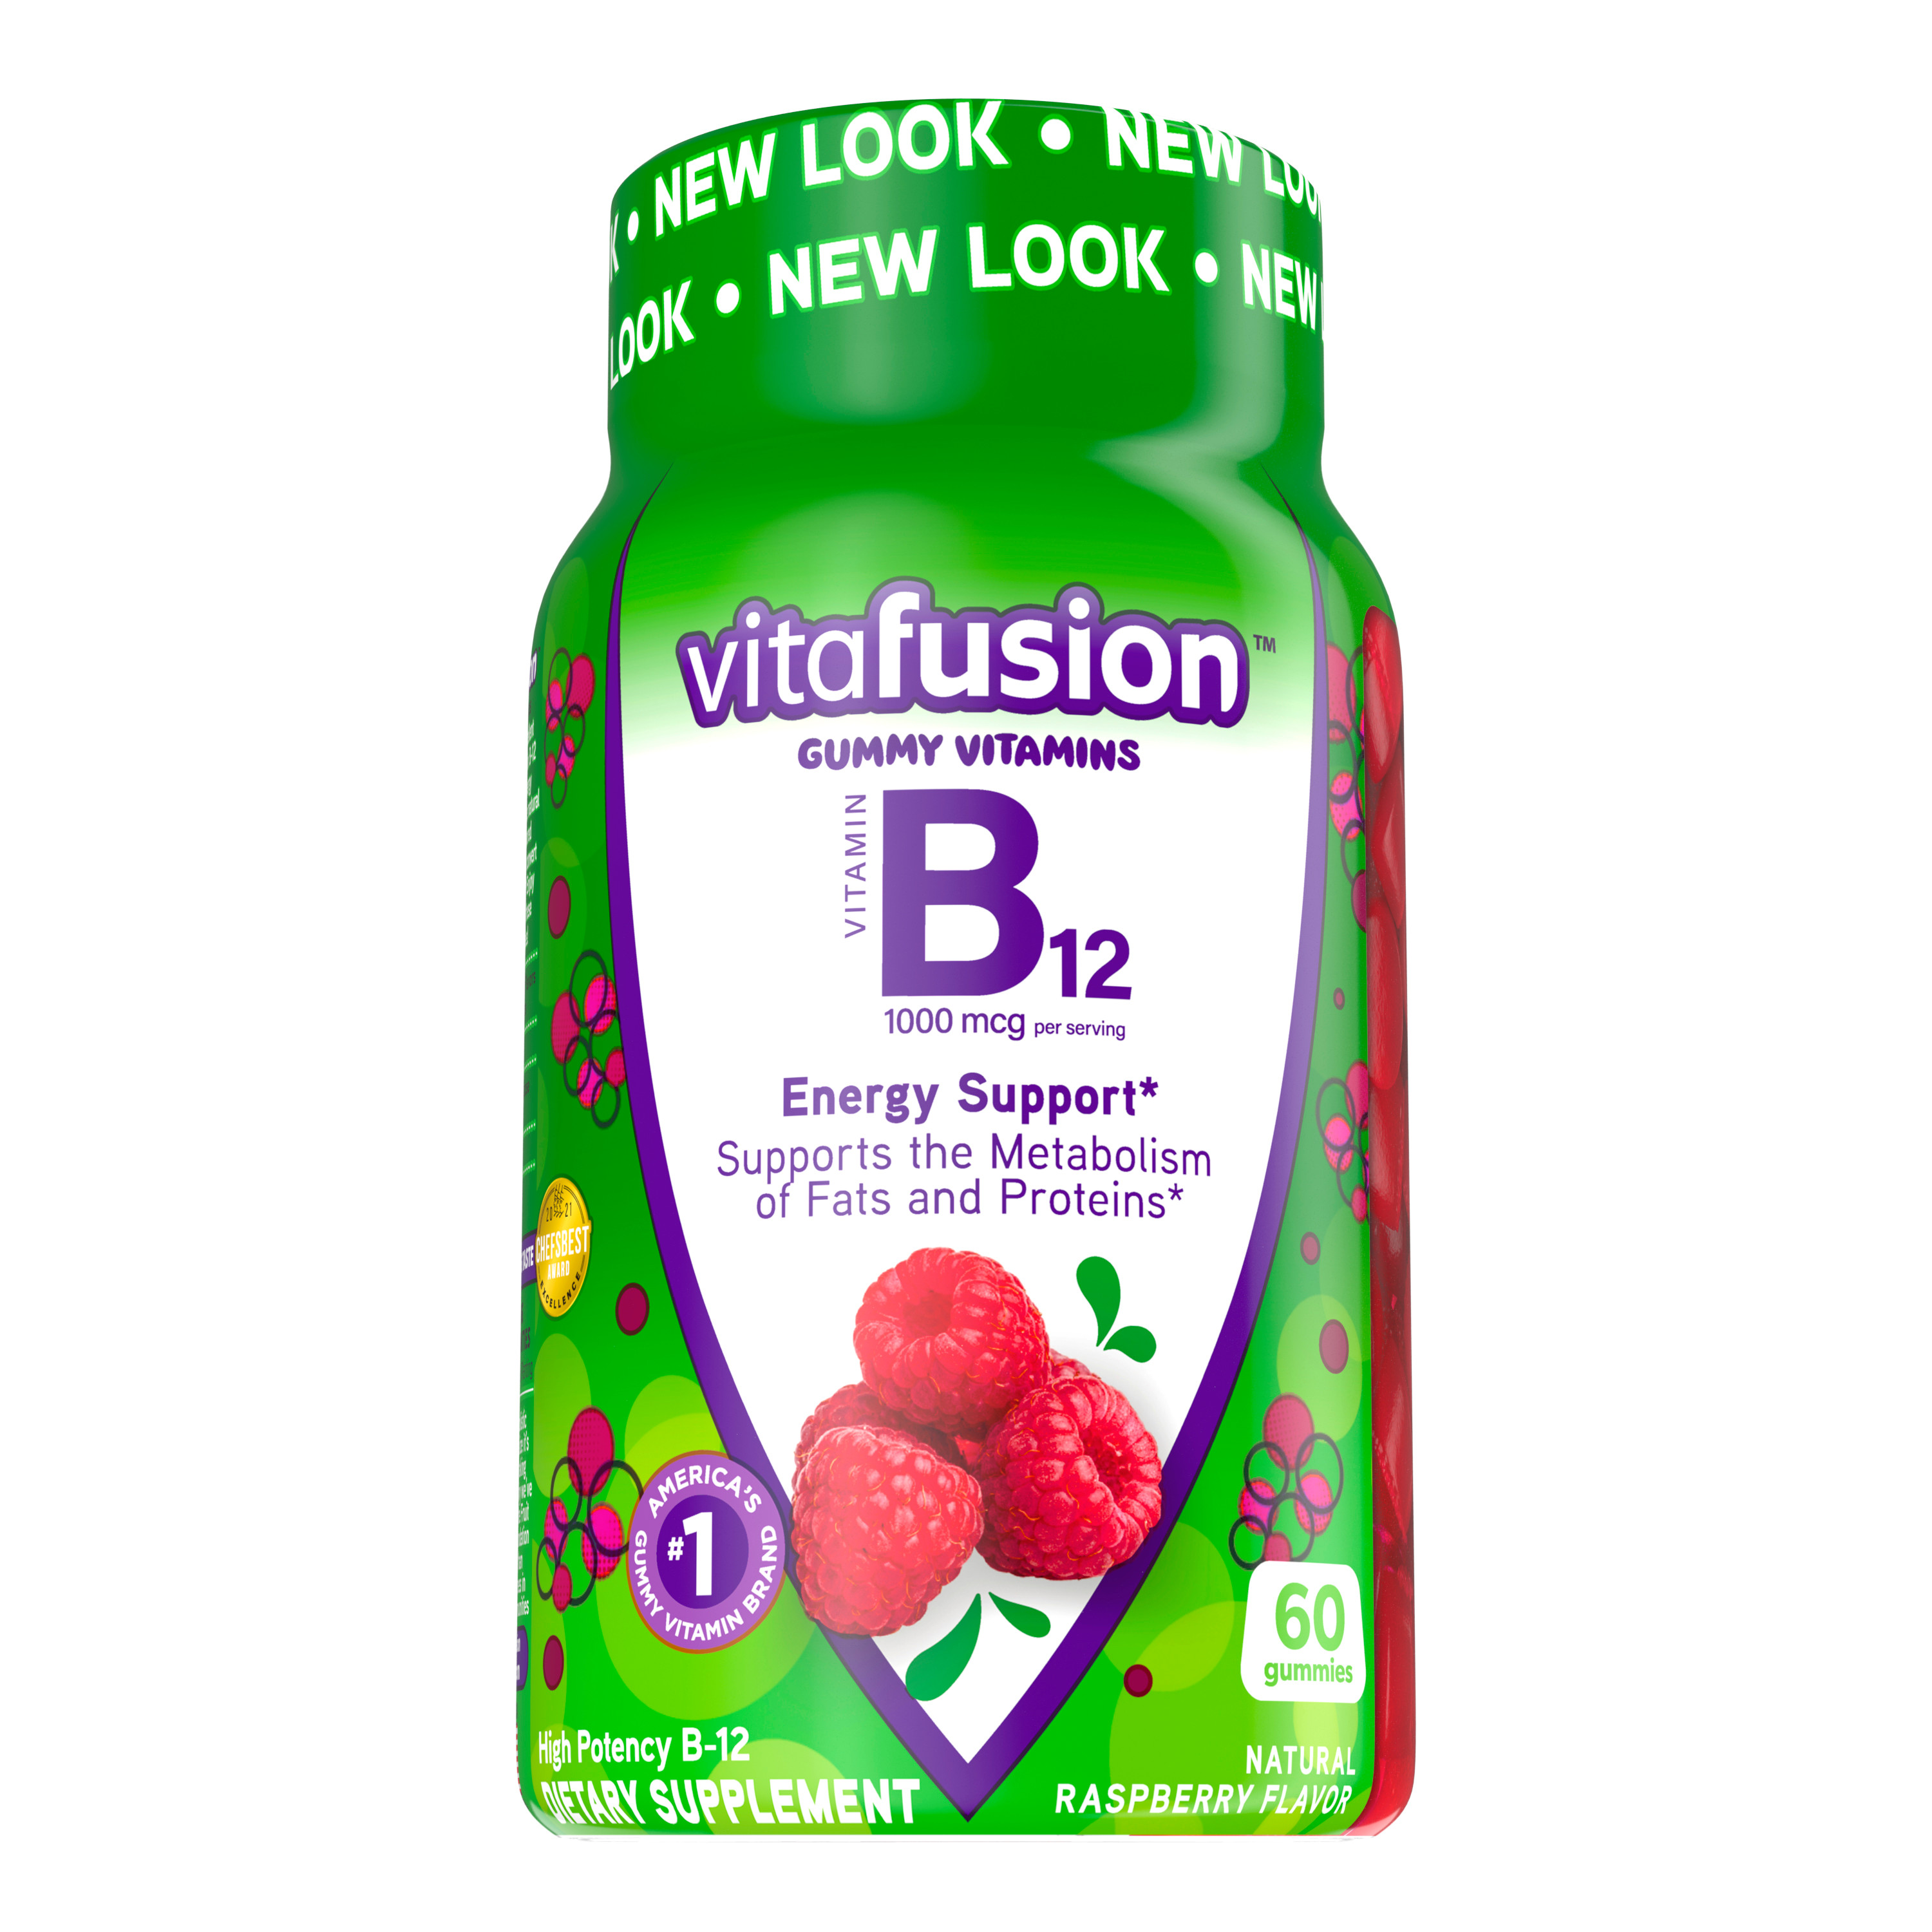 Vitafusion B12 Gummy Vitamins, Delicious Raspberry Flavor, 60 Count - image 1 of 9